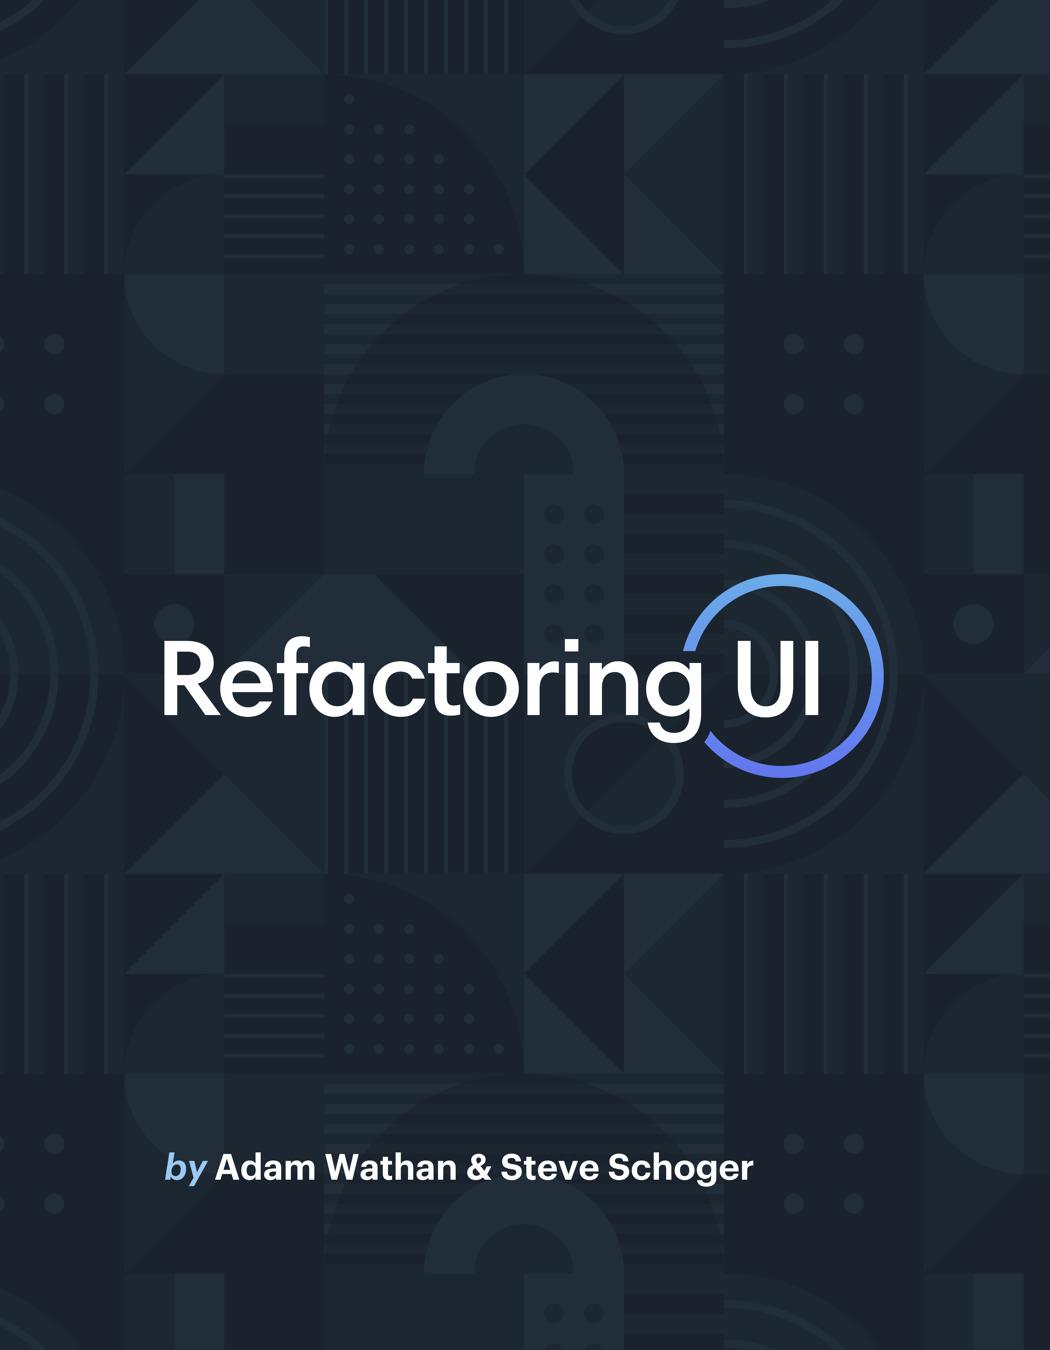 Refactoring UI by Adam Wathan and Steve Schoger